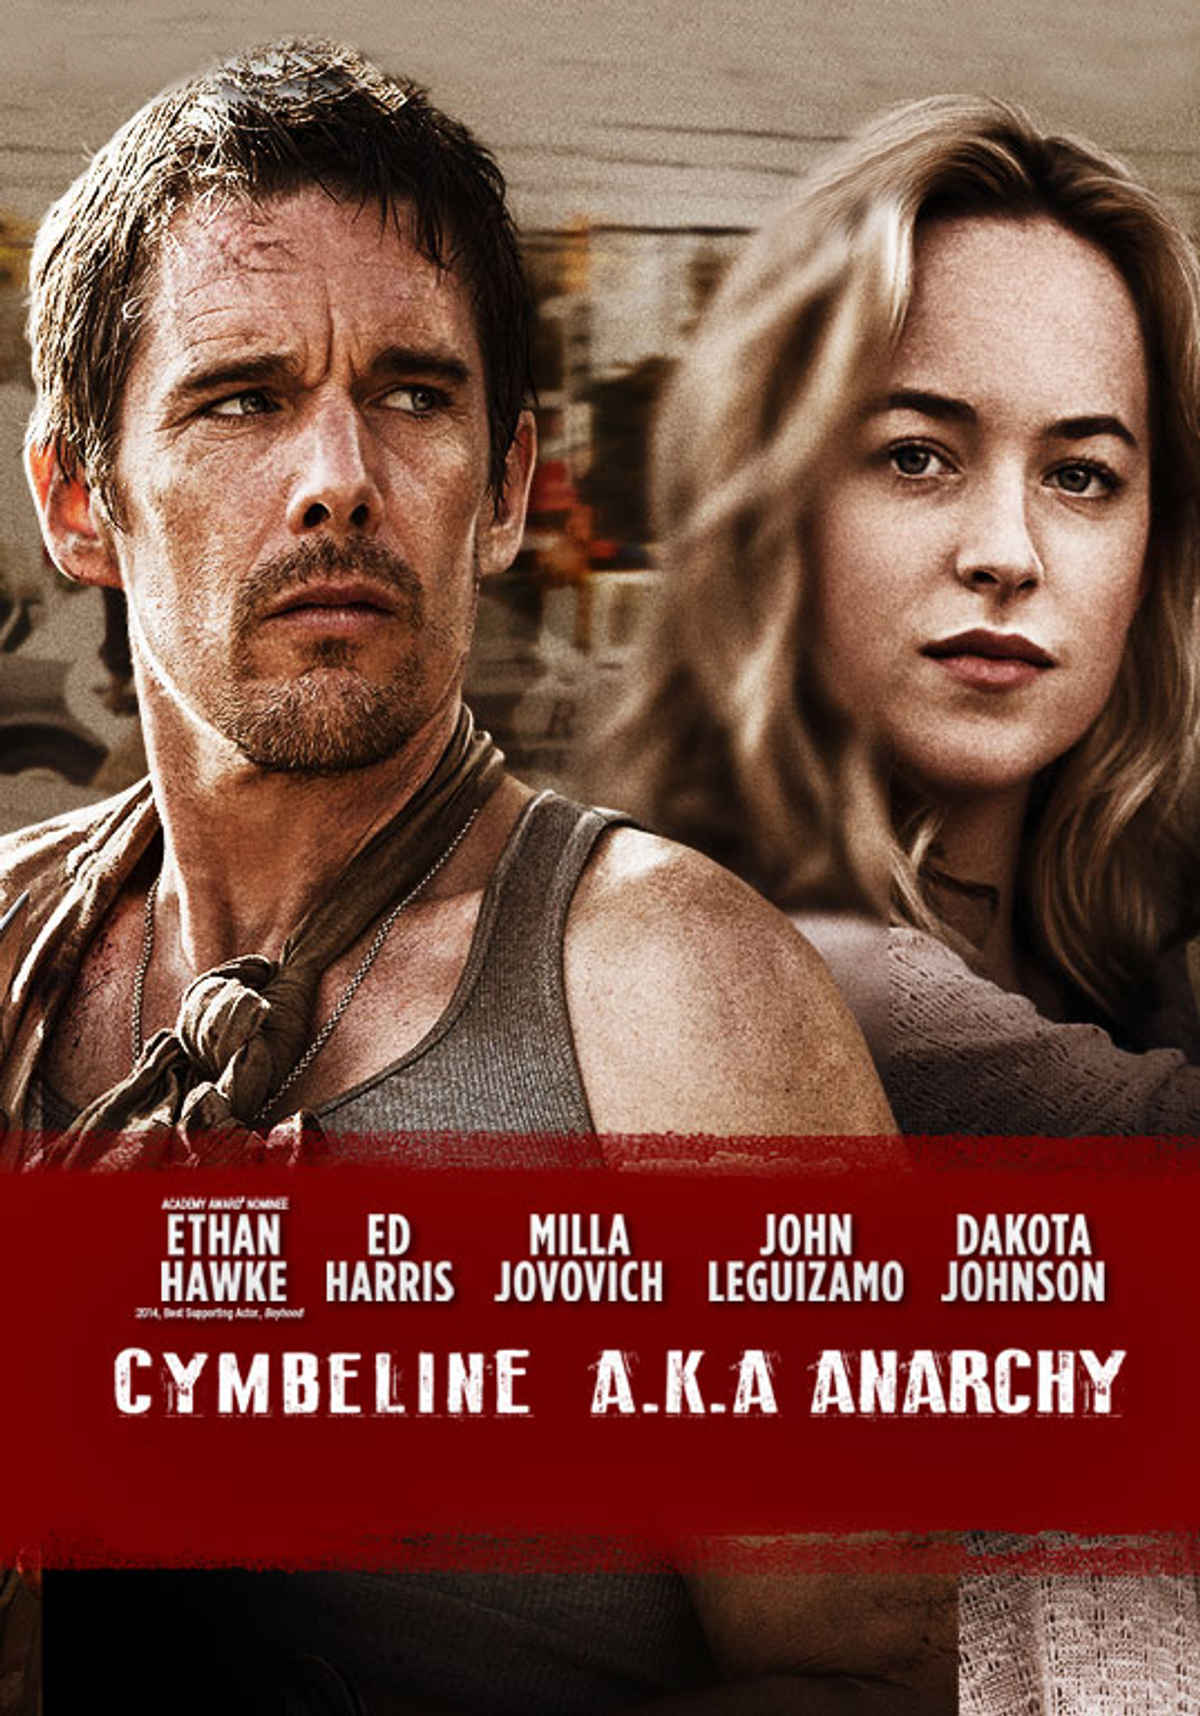 Cymbeline Movie 2015 Release Date Cast Trailer Songs Streaming